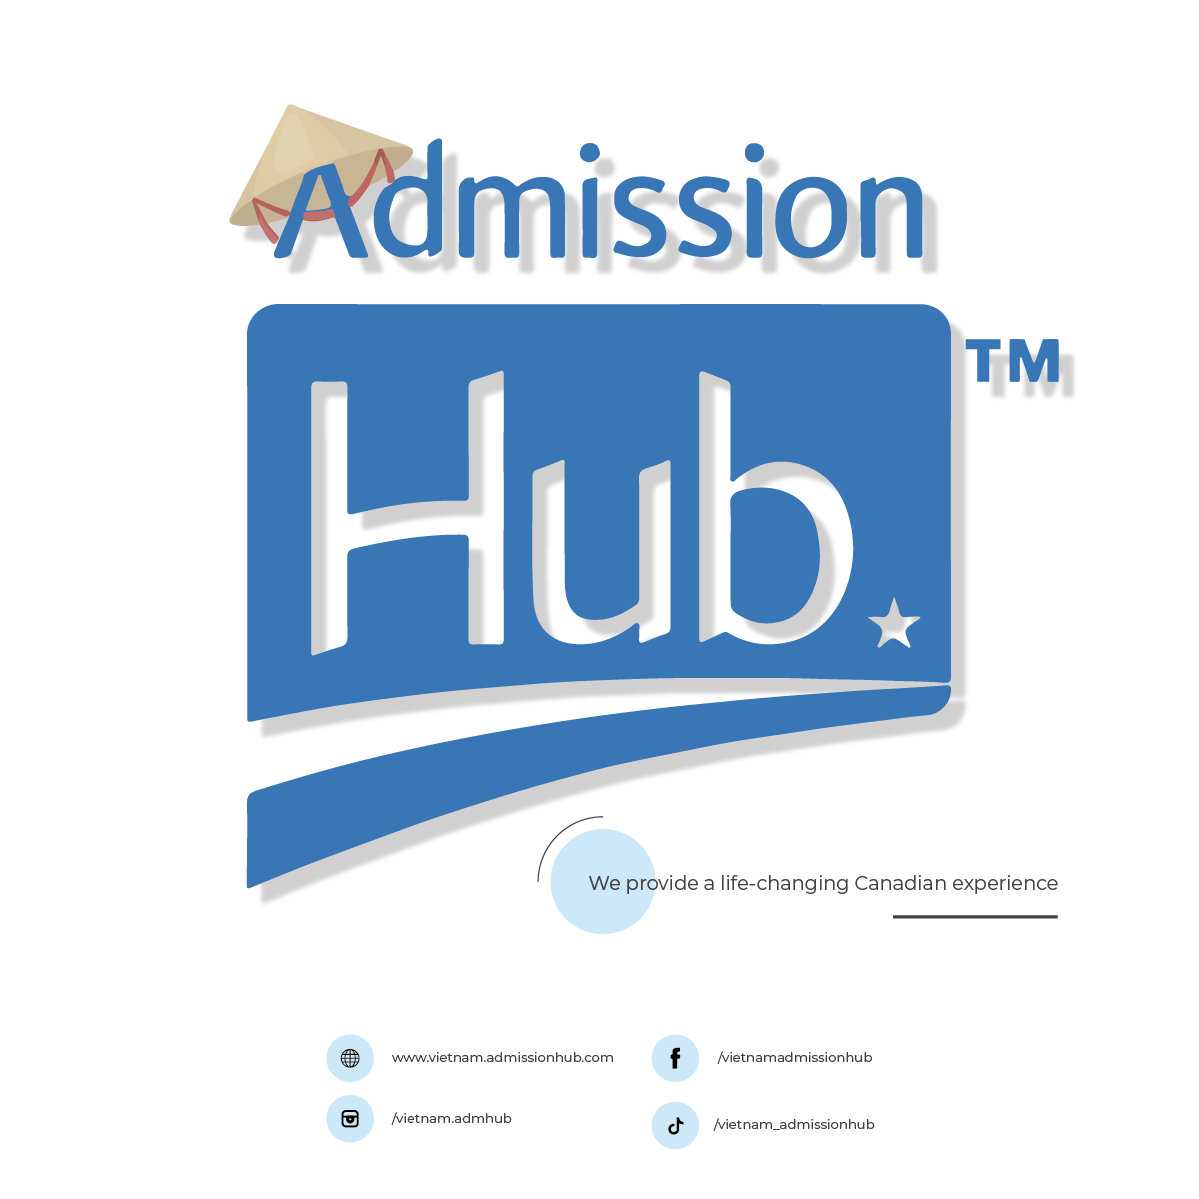 v admission hub - Stream Hub